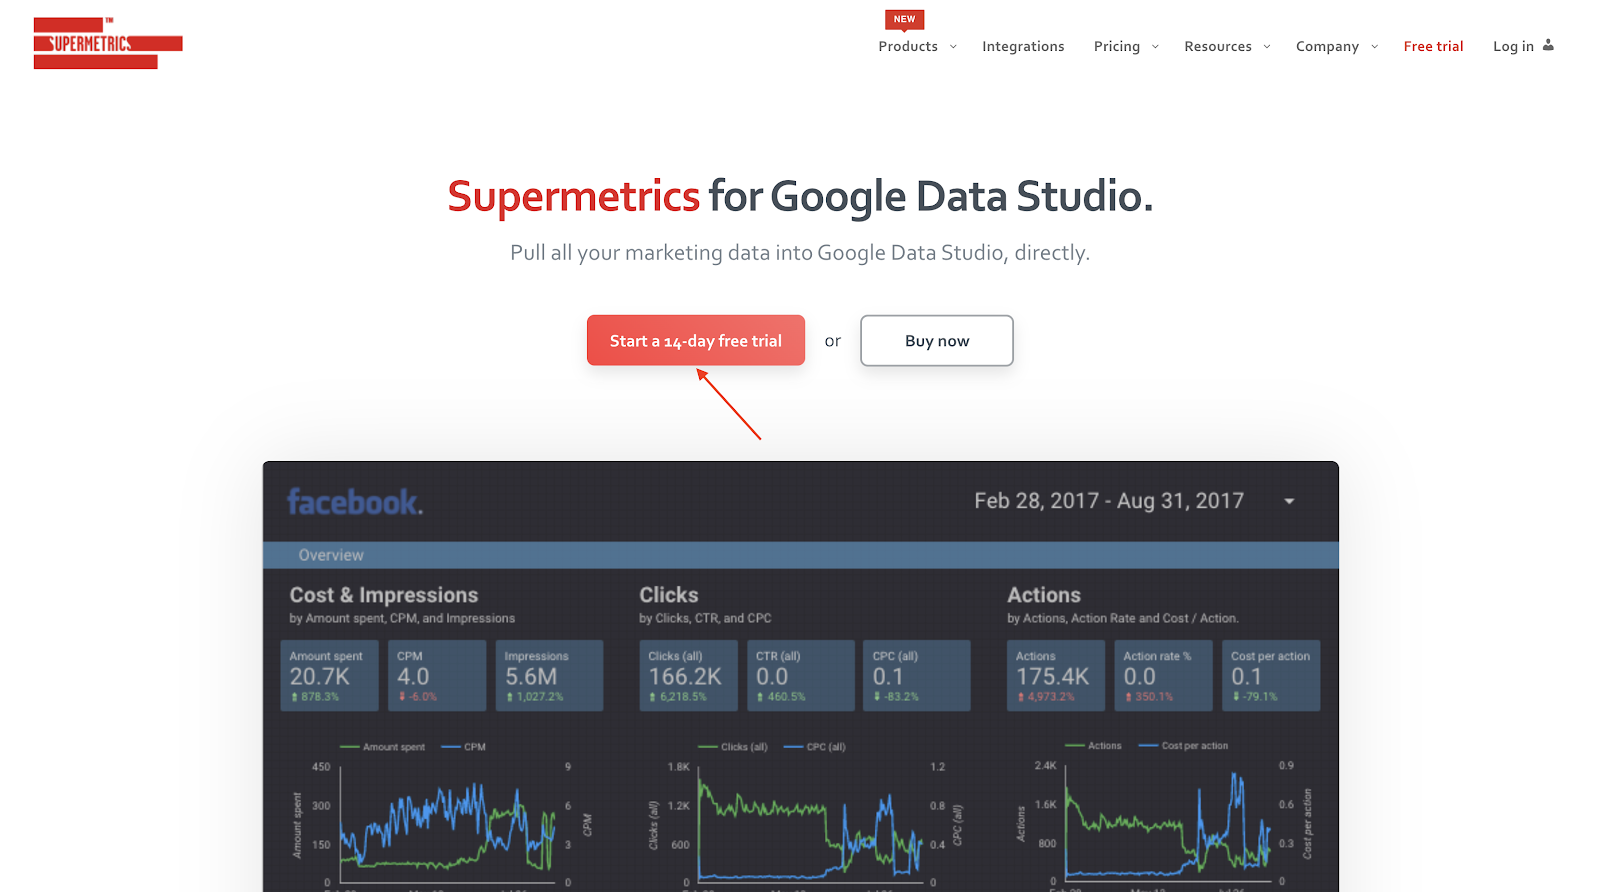 Supermetrics for Google Data Studio